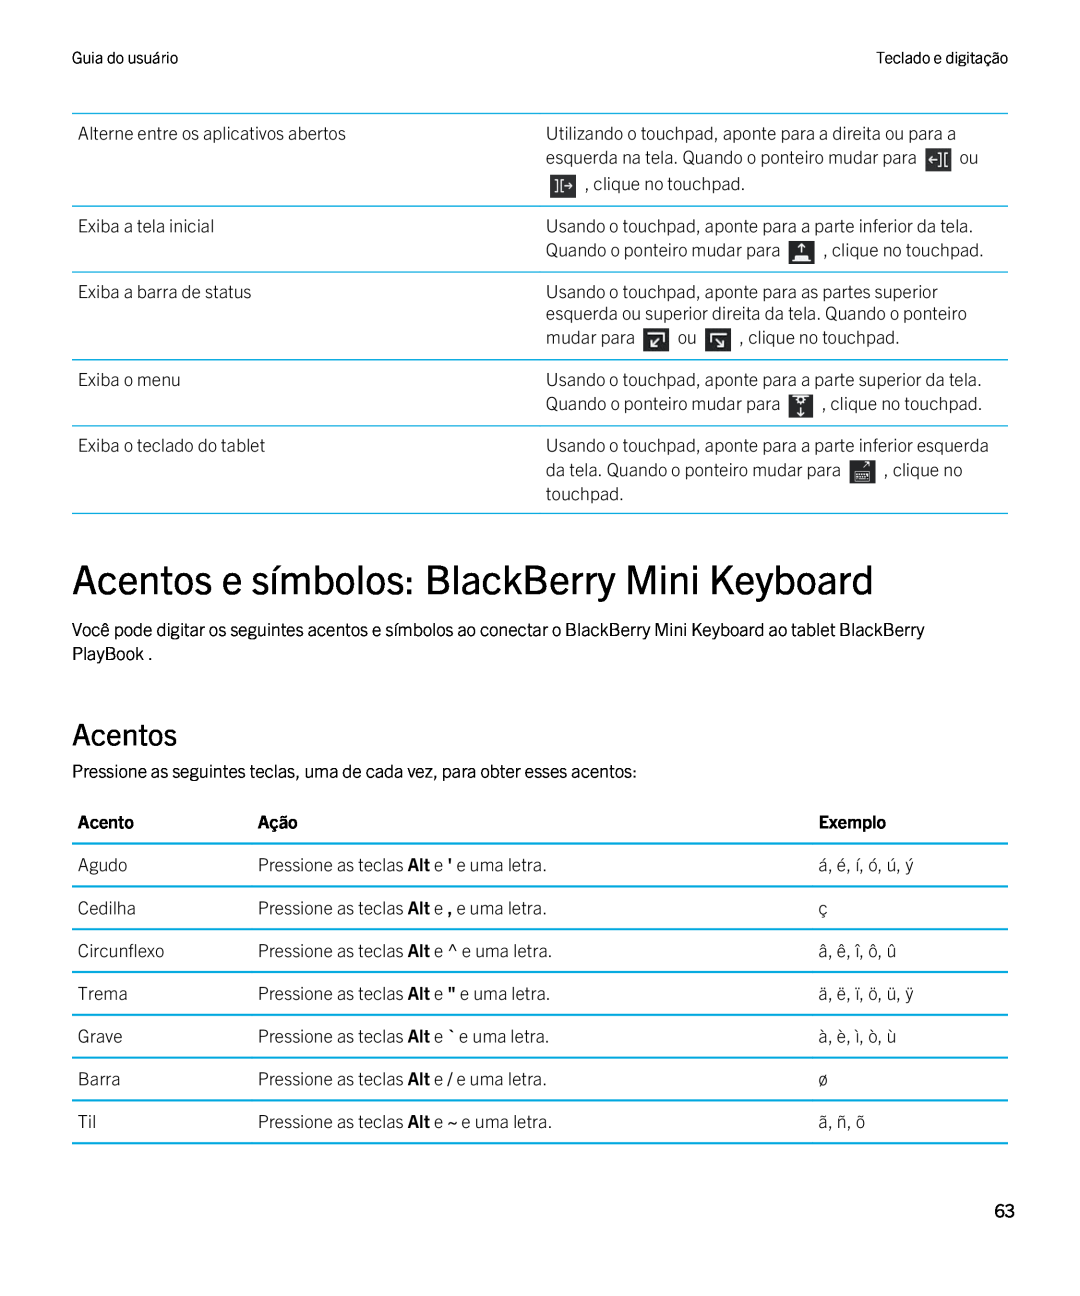 Blackberry 2.0.1 manual Acentos e símbolos BlackBerry Mini Keyboard, Ação, Exemplo 